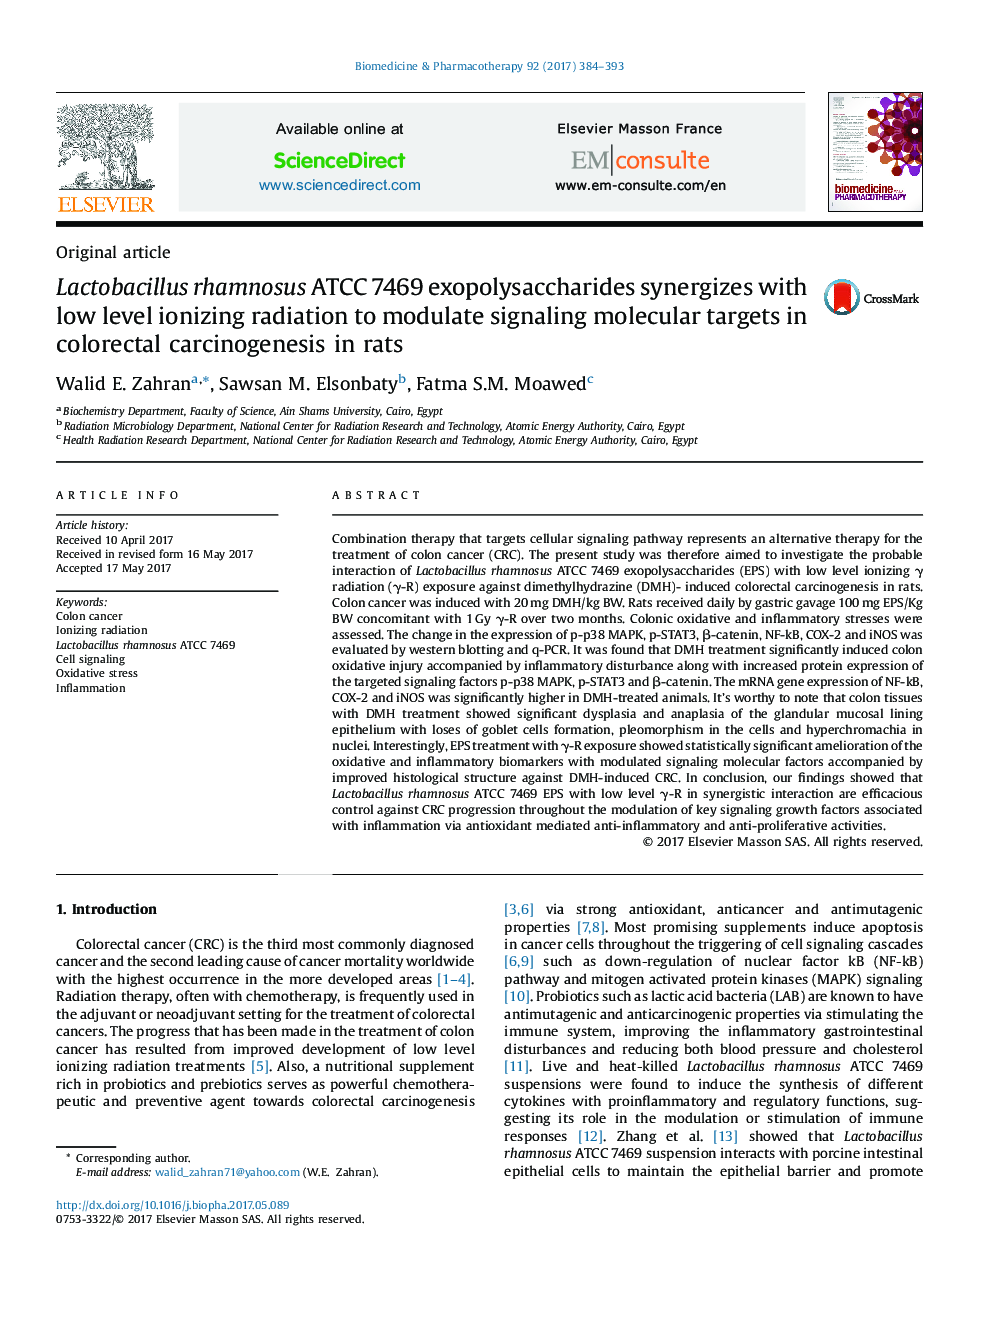 Lactobacillus rhamnosus ATCC 7469 exopolysaccharides synergizes with low level ionizing radiation to modulate signaling molecular targets in colorectal carcinogenesis in rats